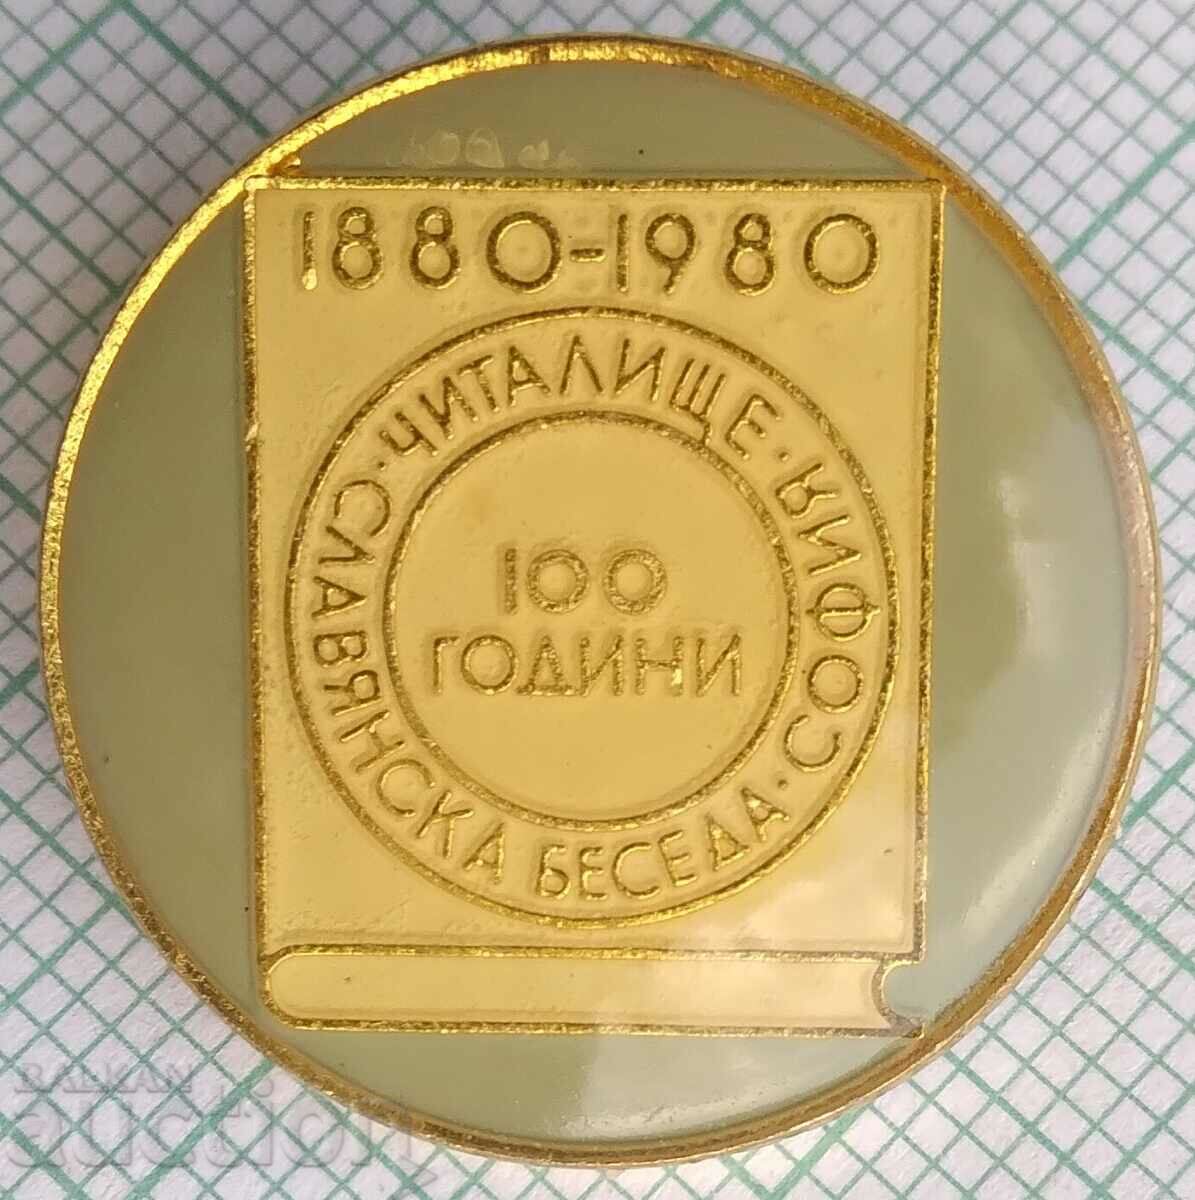 16387 Insigna - 100 de ani Centrul comunitar Slavyanska beseda Sofia